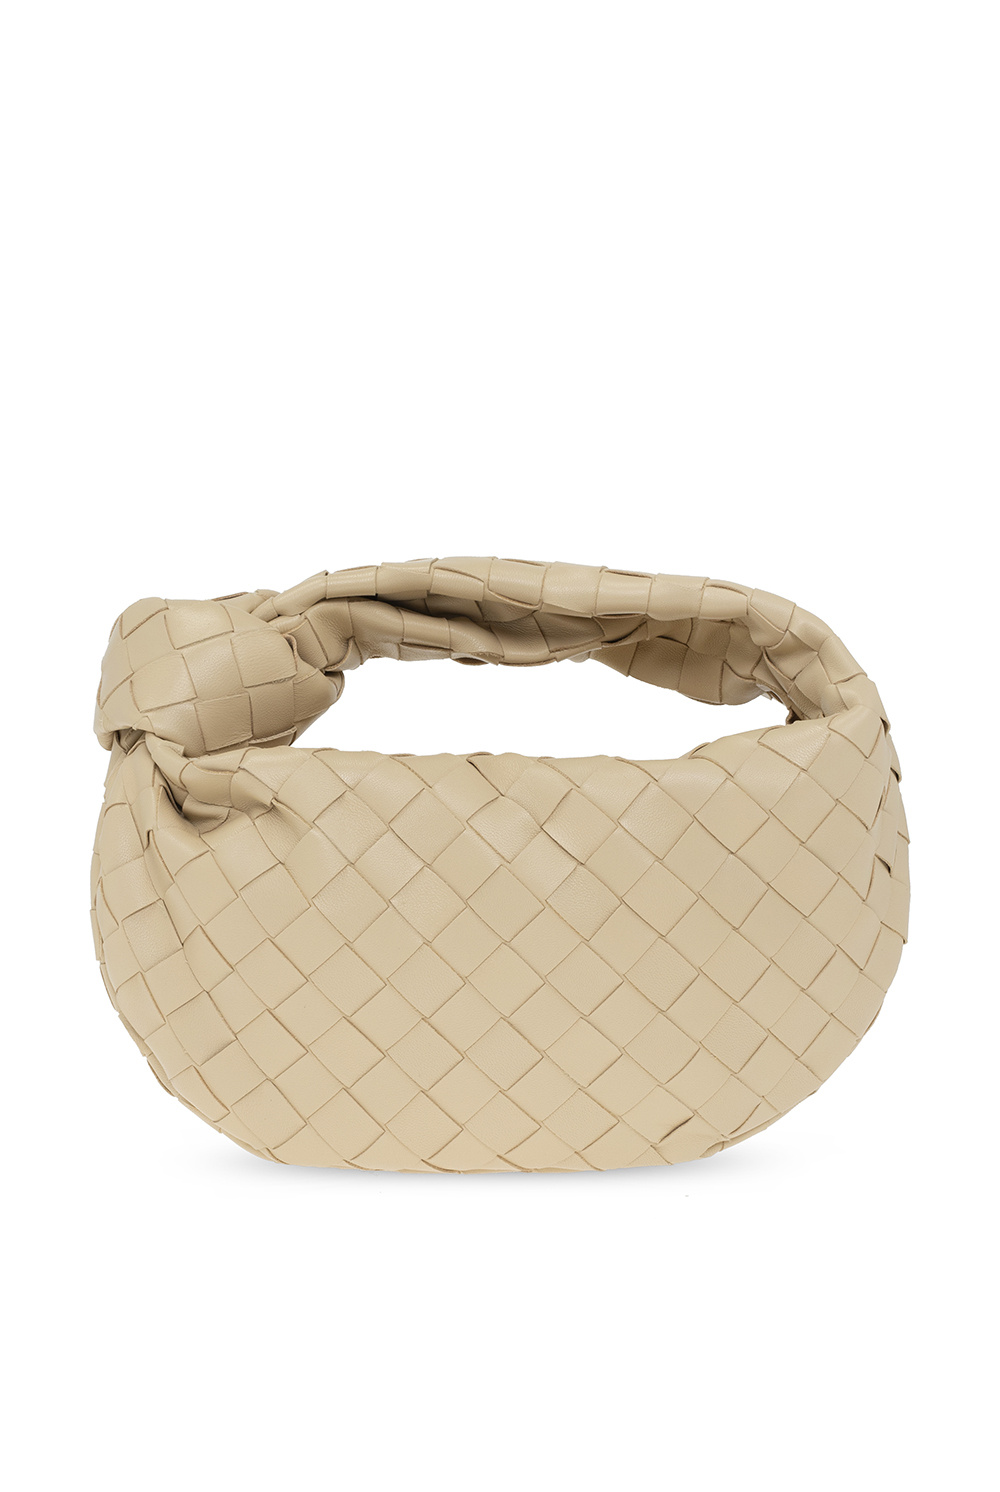 Bottega Veneta ‘Jodie Mini’ hobo shoulder bag